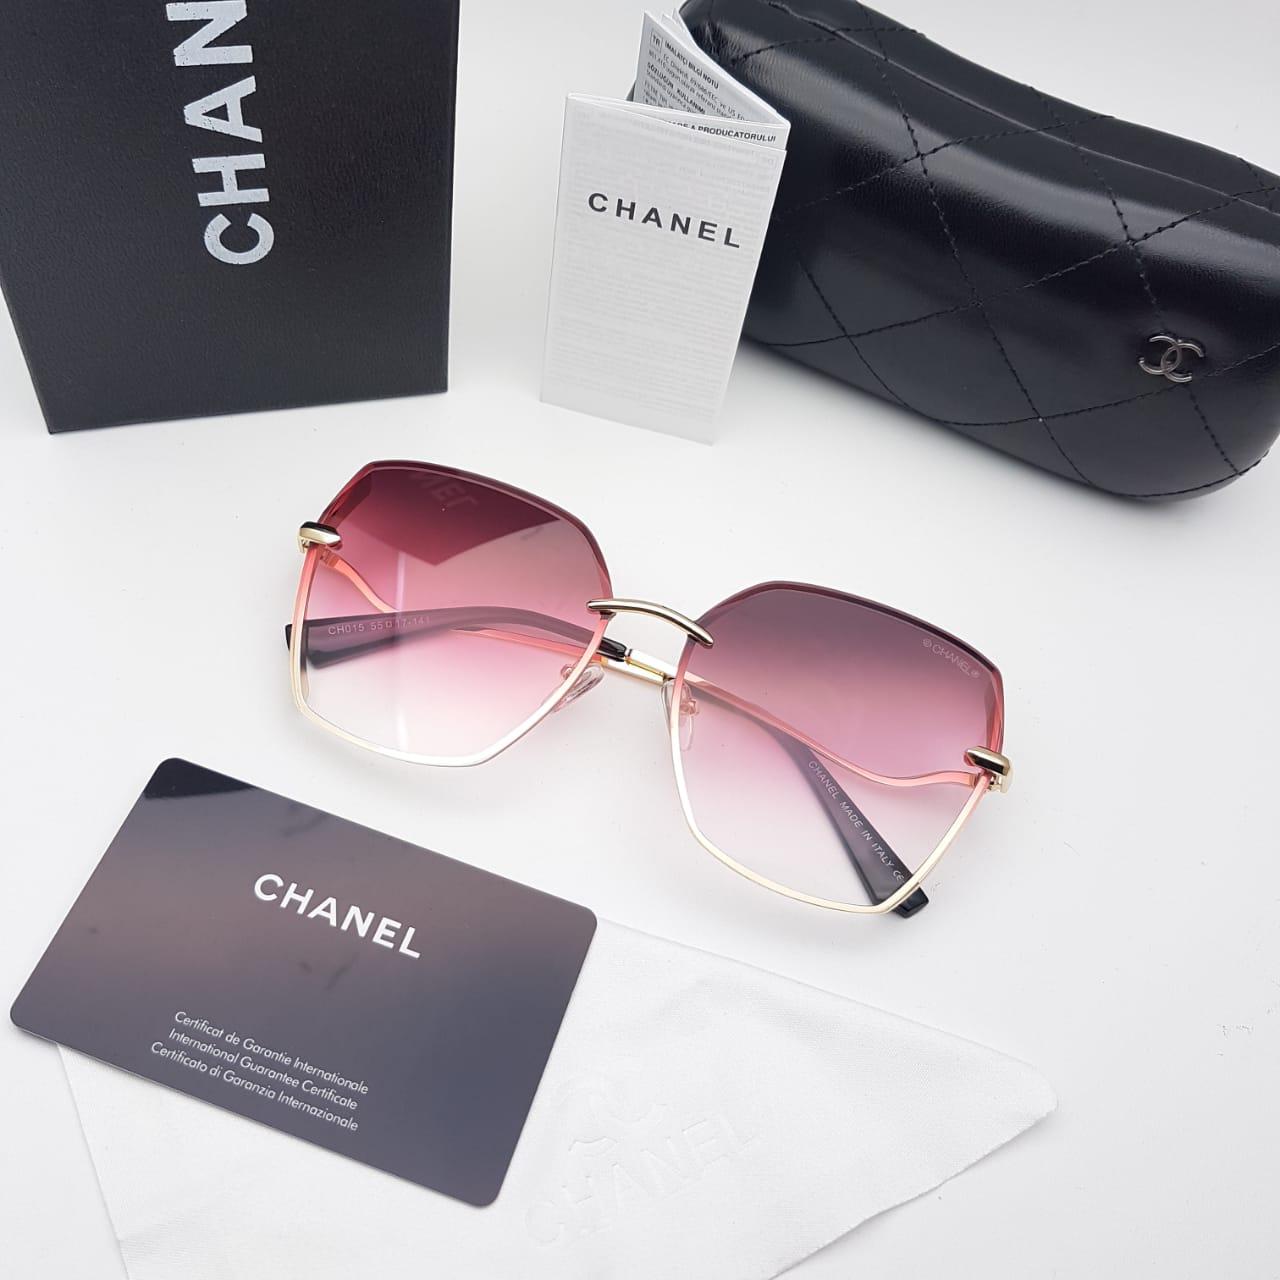 Sunglasses Kacamata Chanel Pria Q8319 Super Fullset - Bayar Di Tempat ( COD )